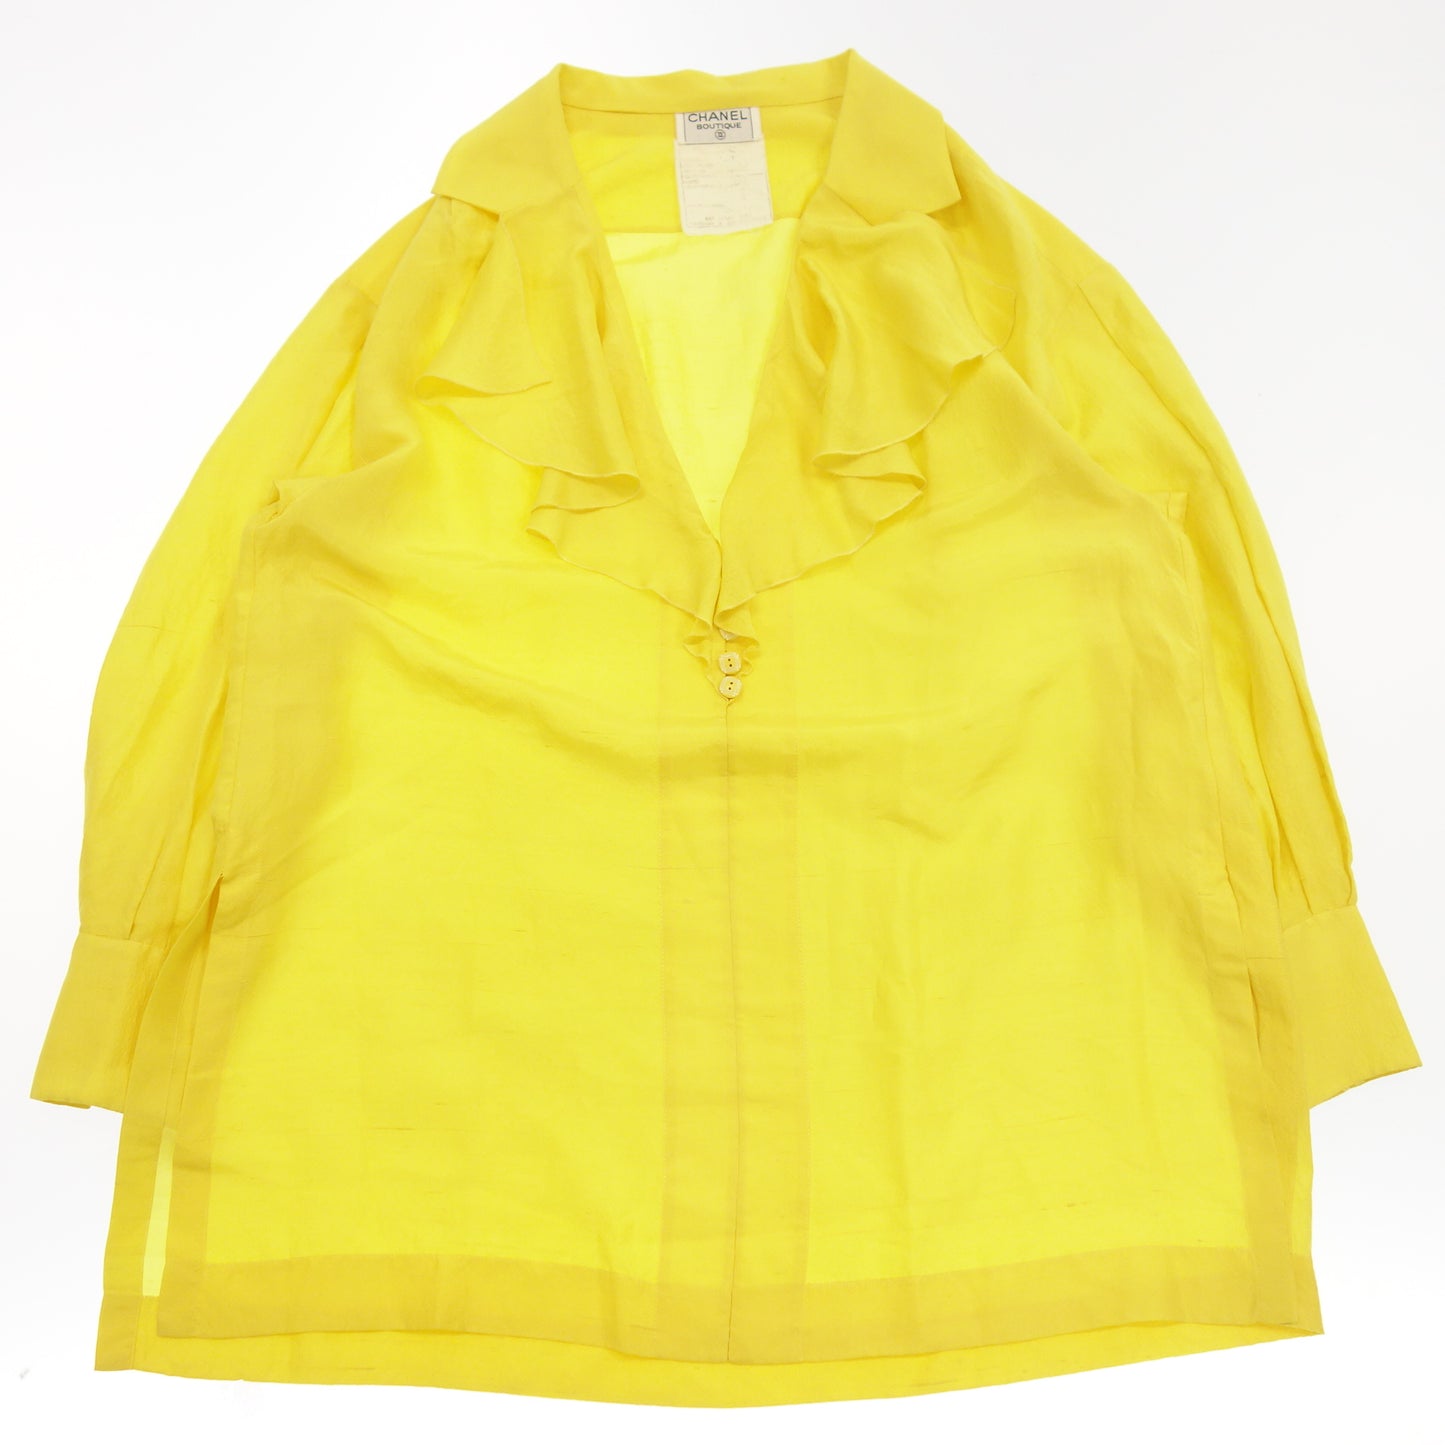 Good Condition◆CHANEL Tunic Shirt 91SS Runway Ruffle Collar Yellow Size 40 Women's CHANEL [AFB6] 